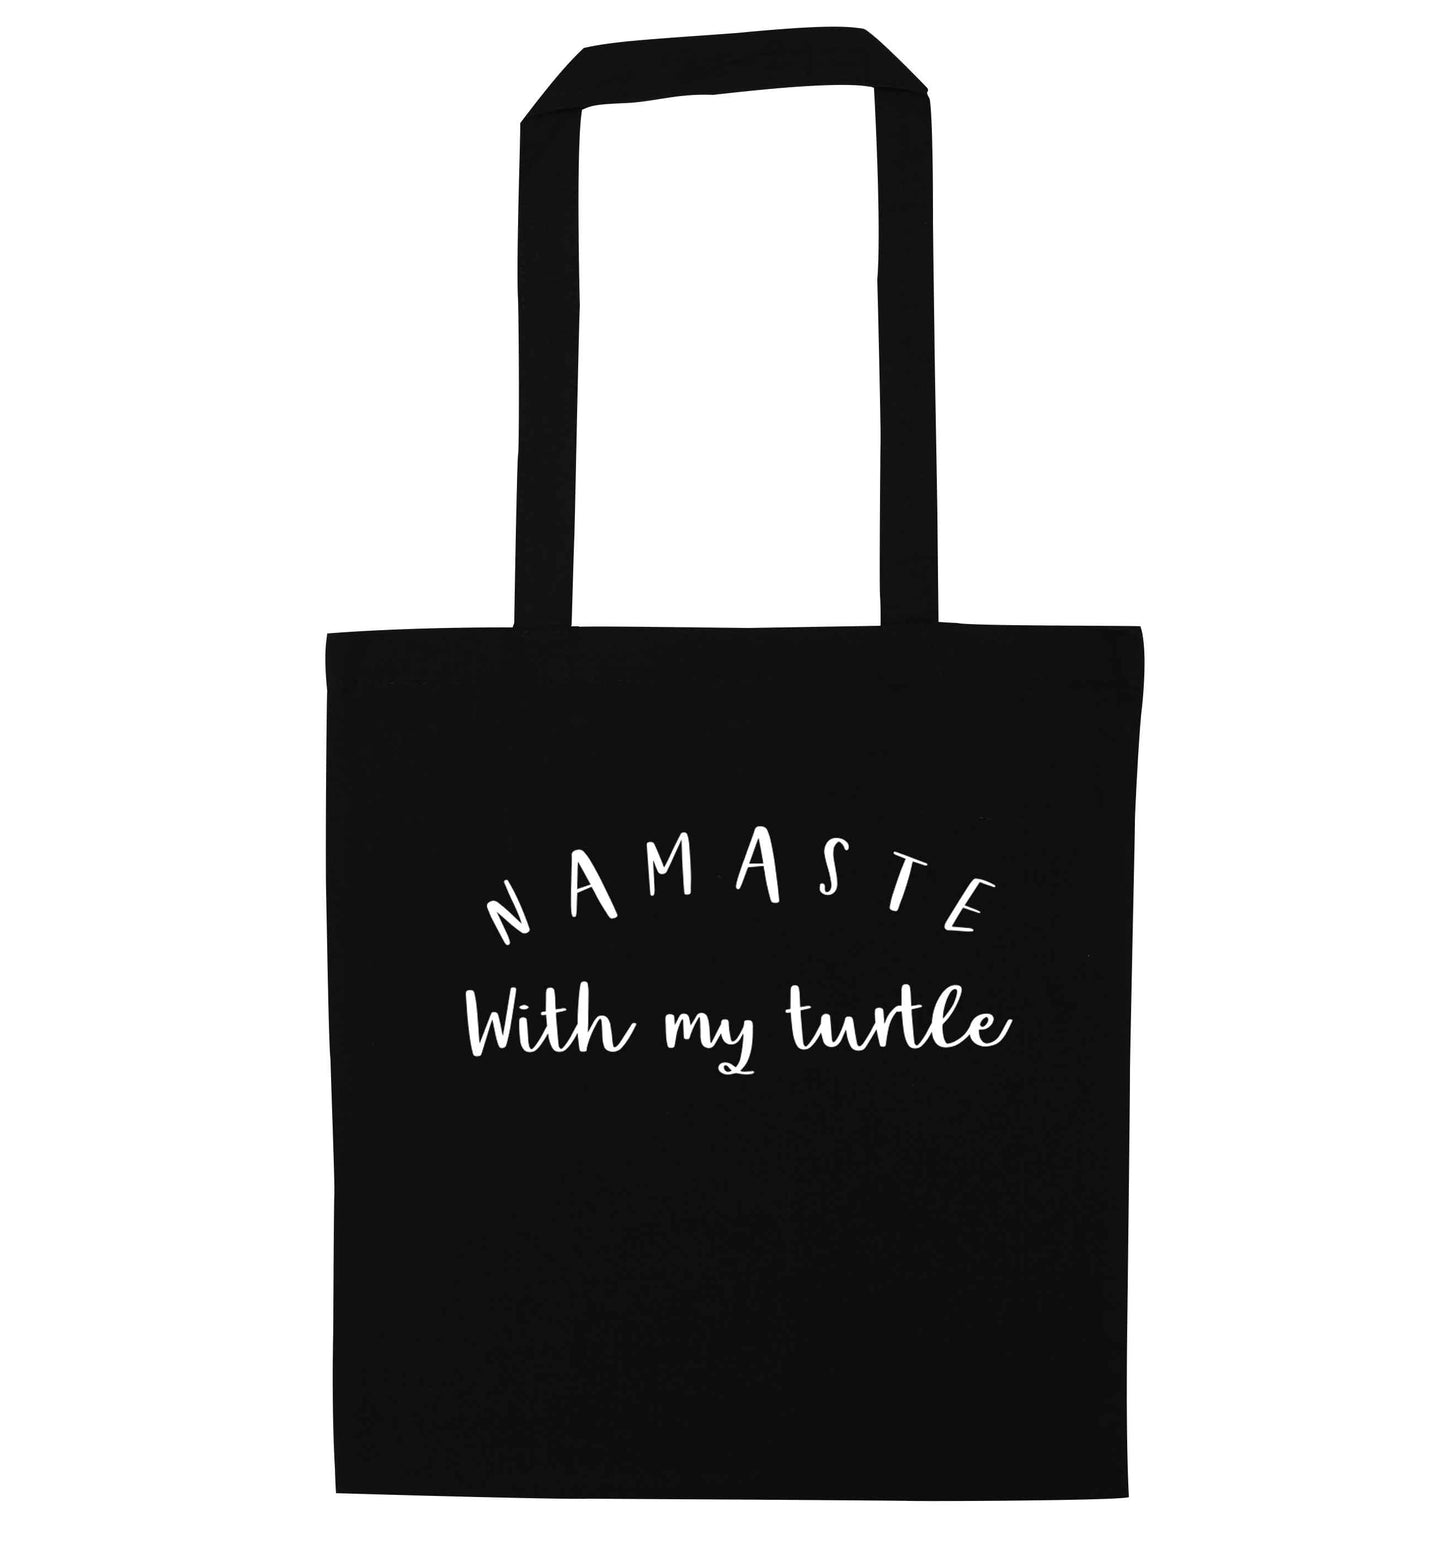 Namaste with my turtle black tote bag